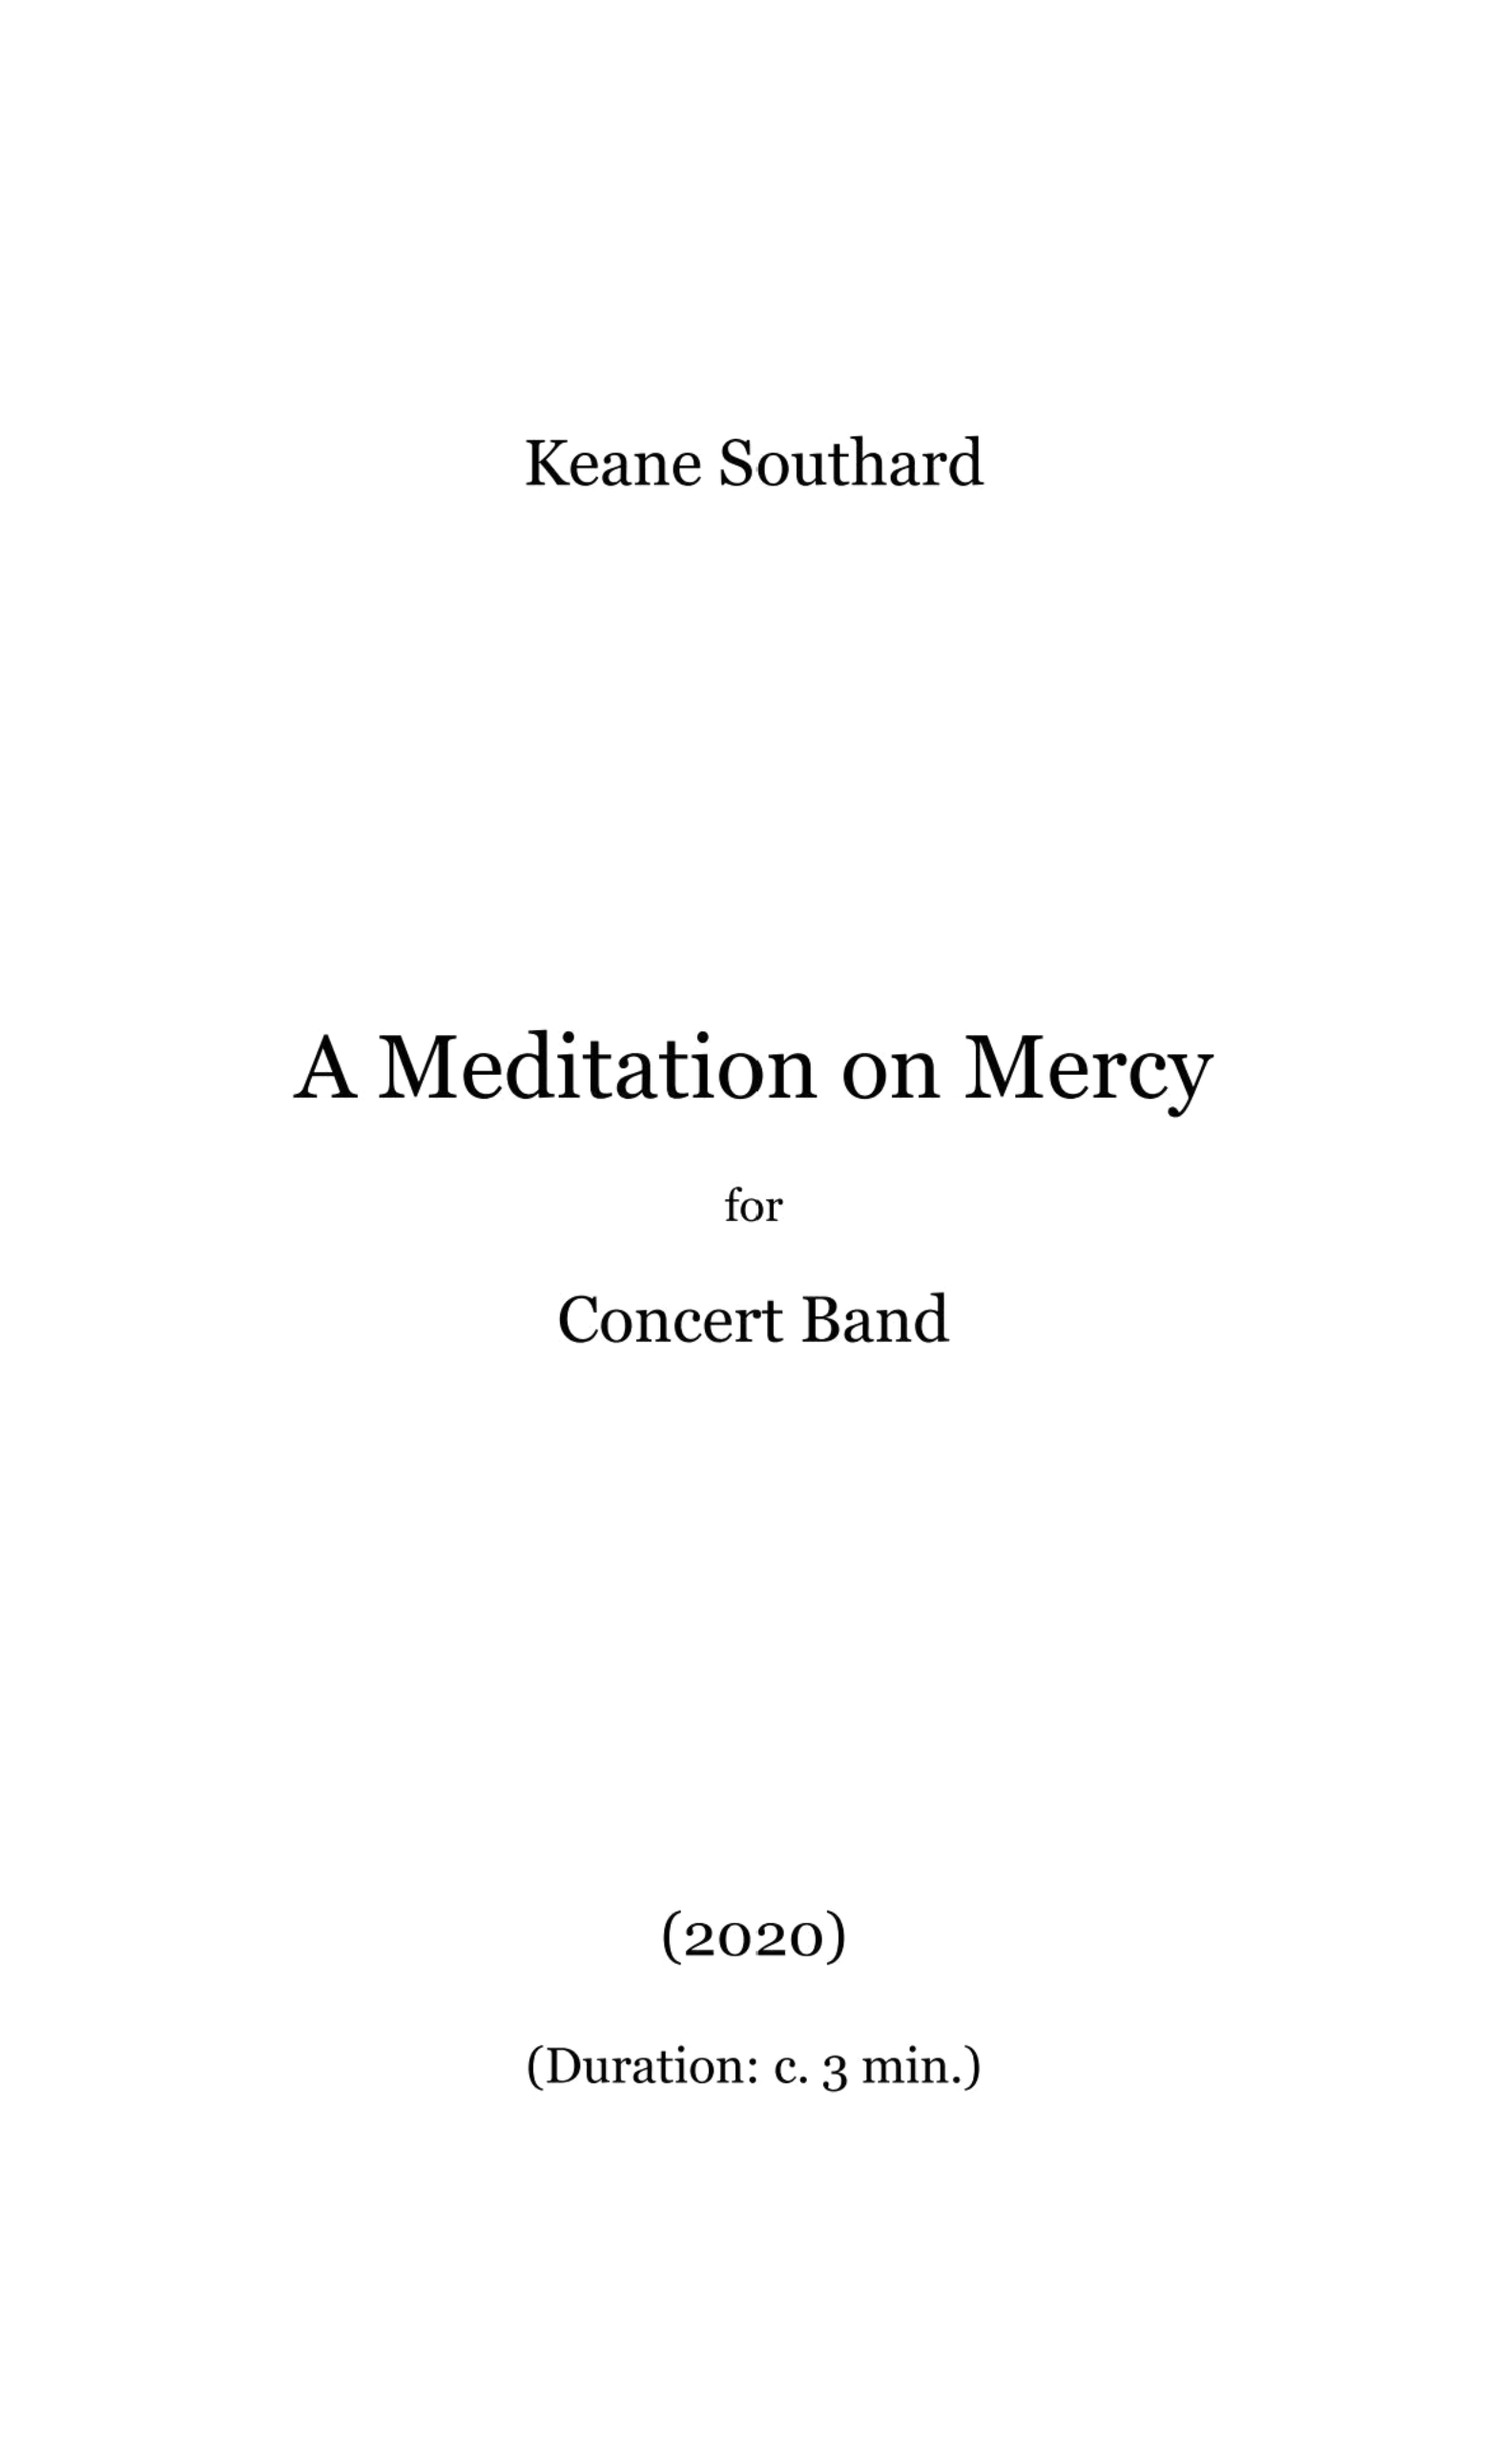 A Meditation On Mercy by Keane Southard